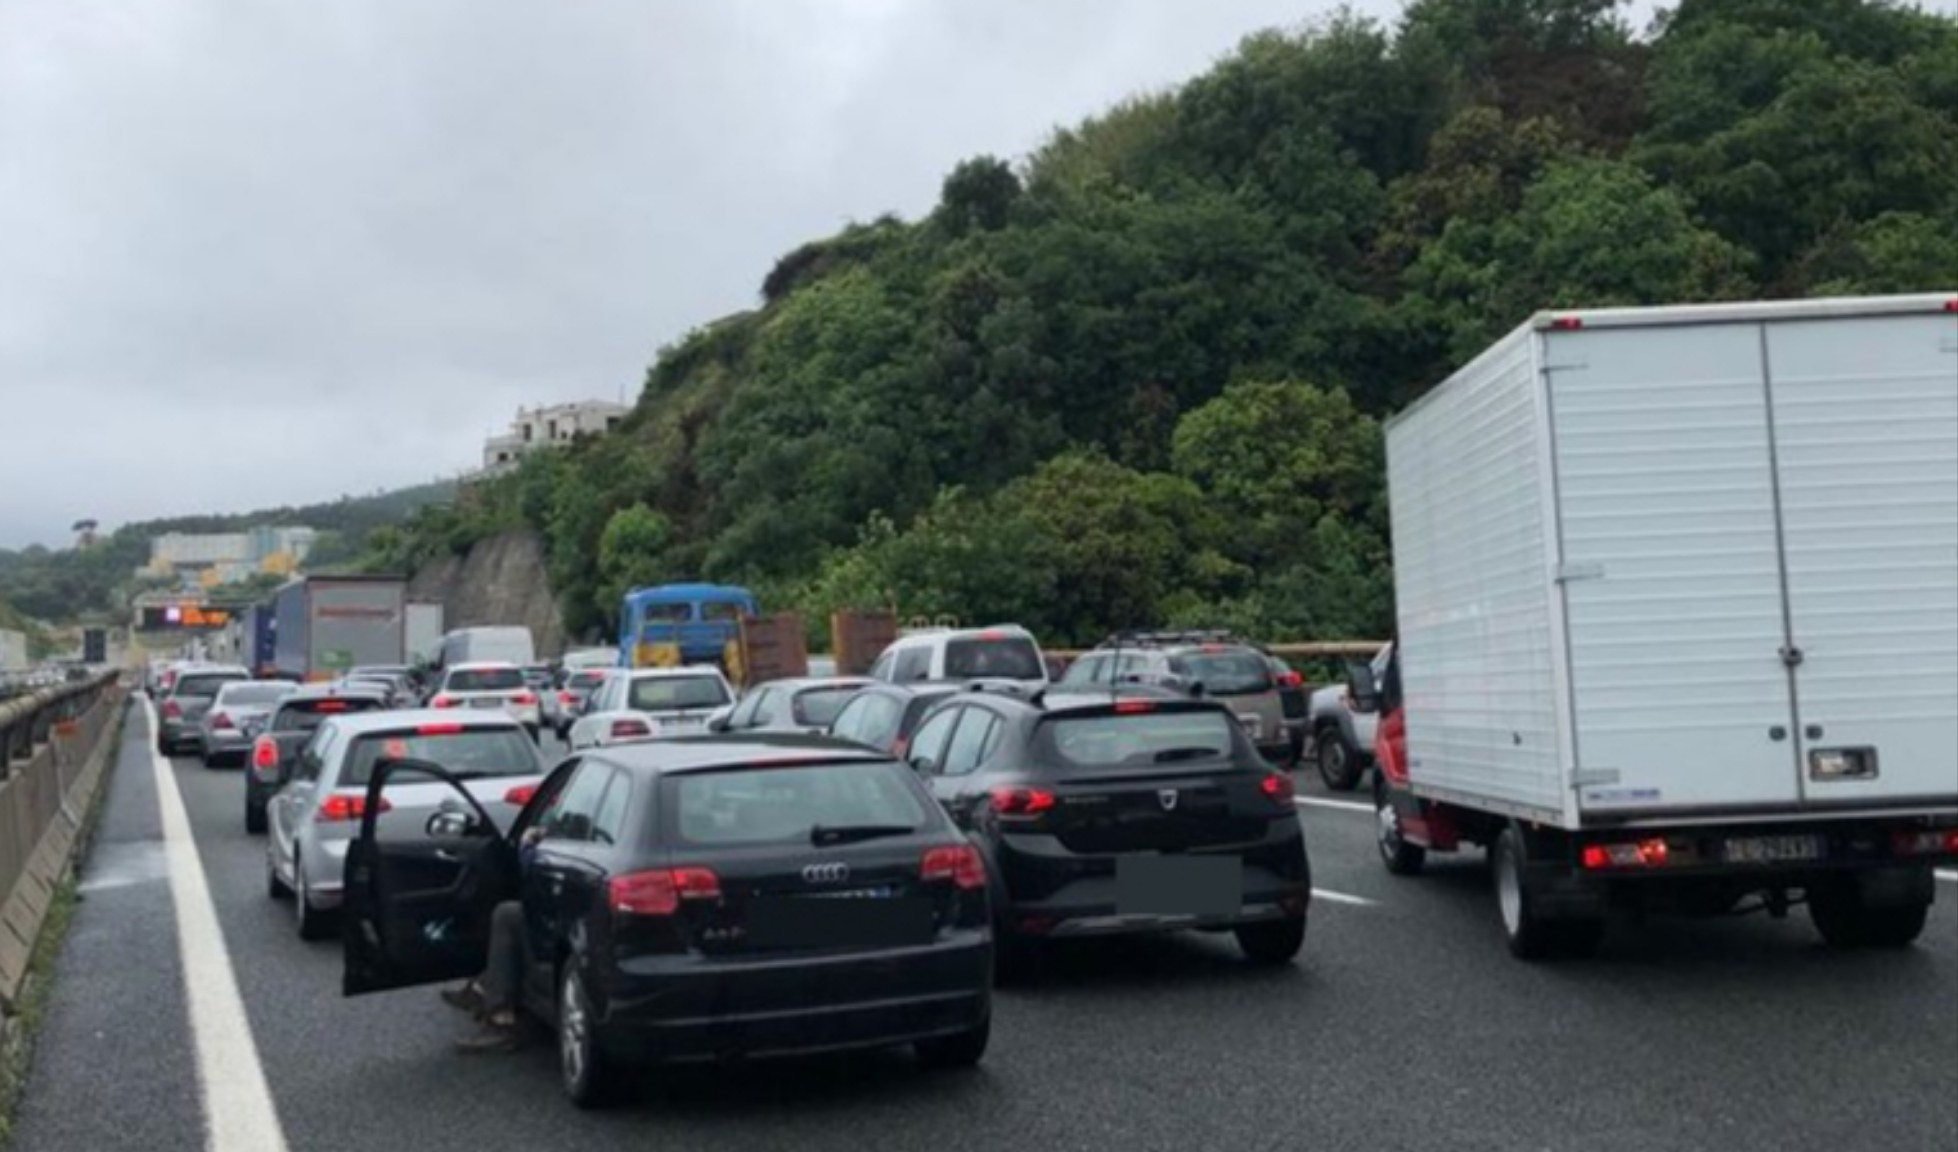 Caos autostrade, lunghe code tra cantieri e incidenti in Liguria